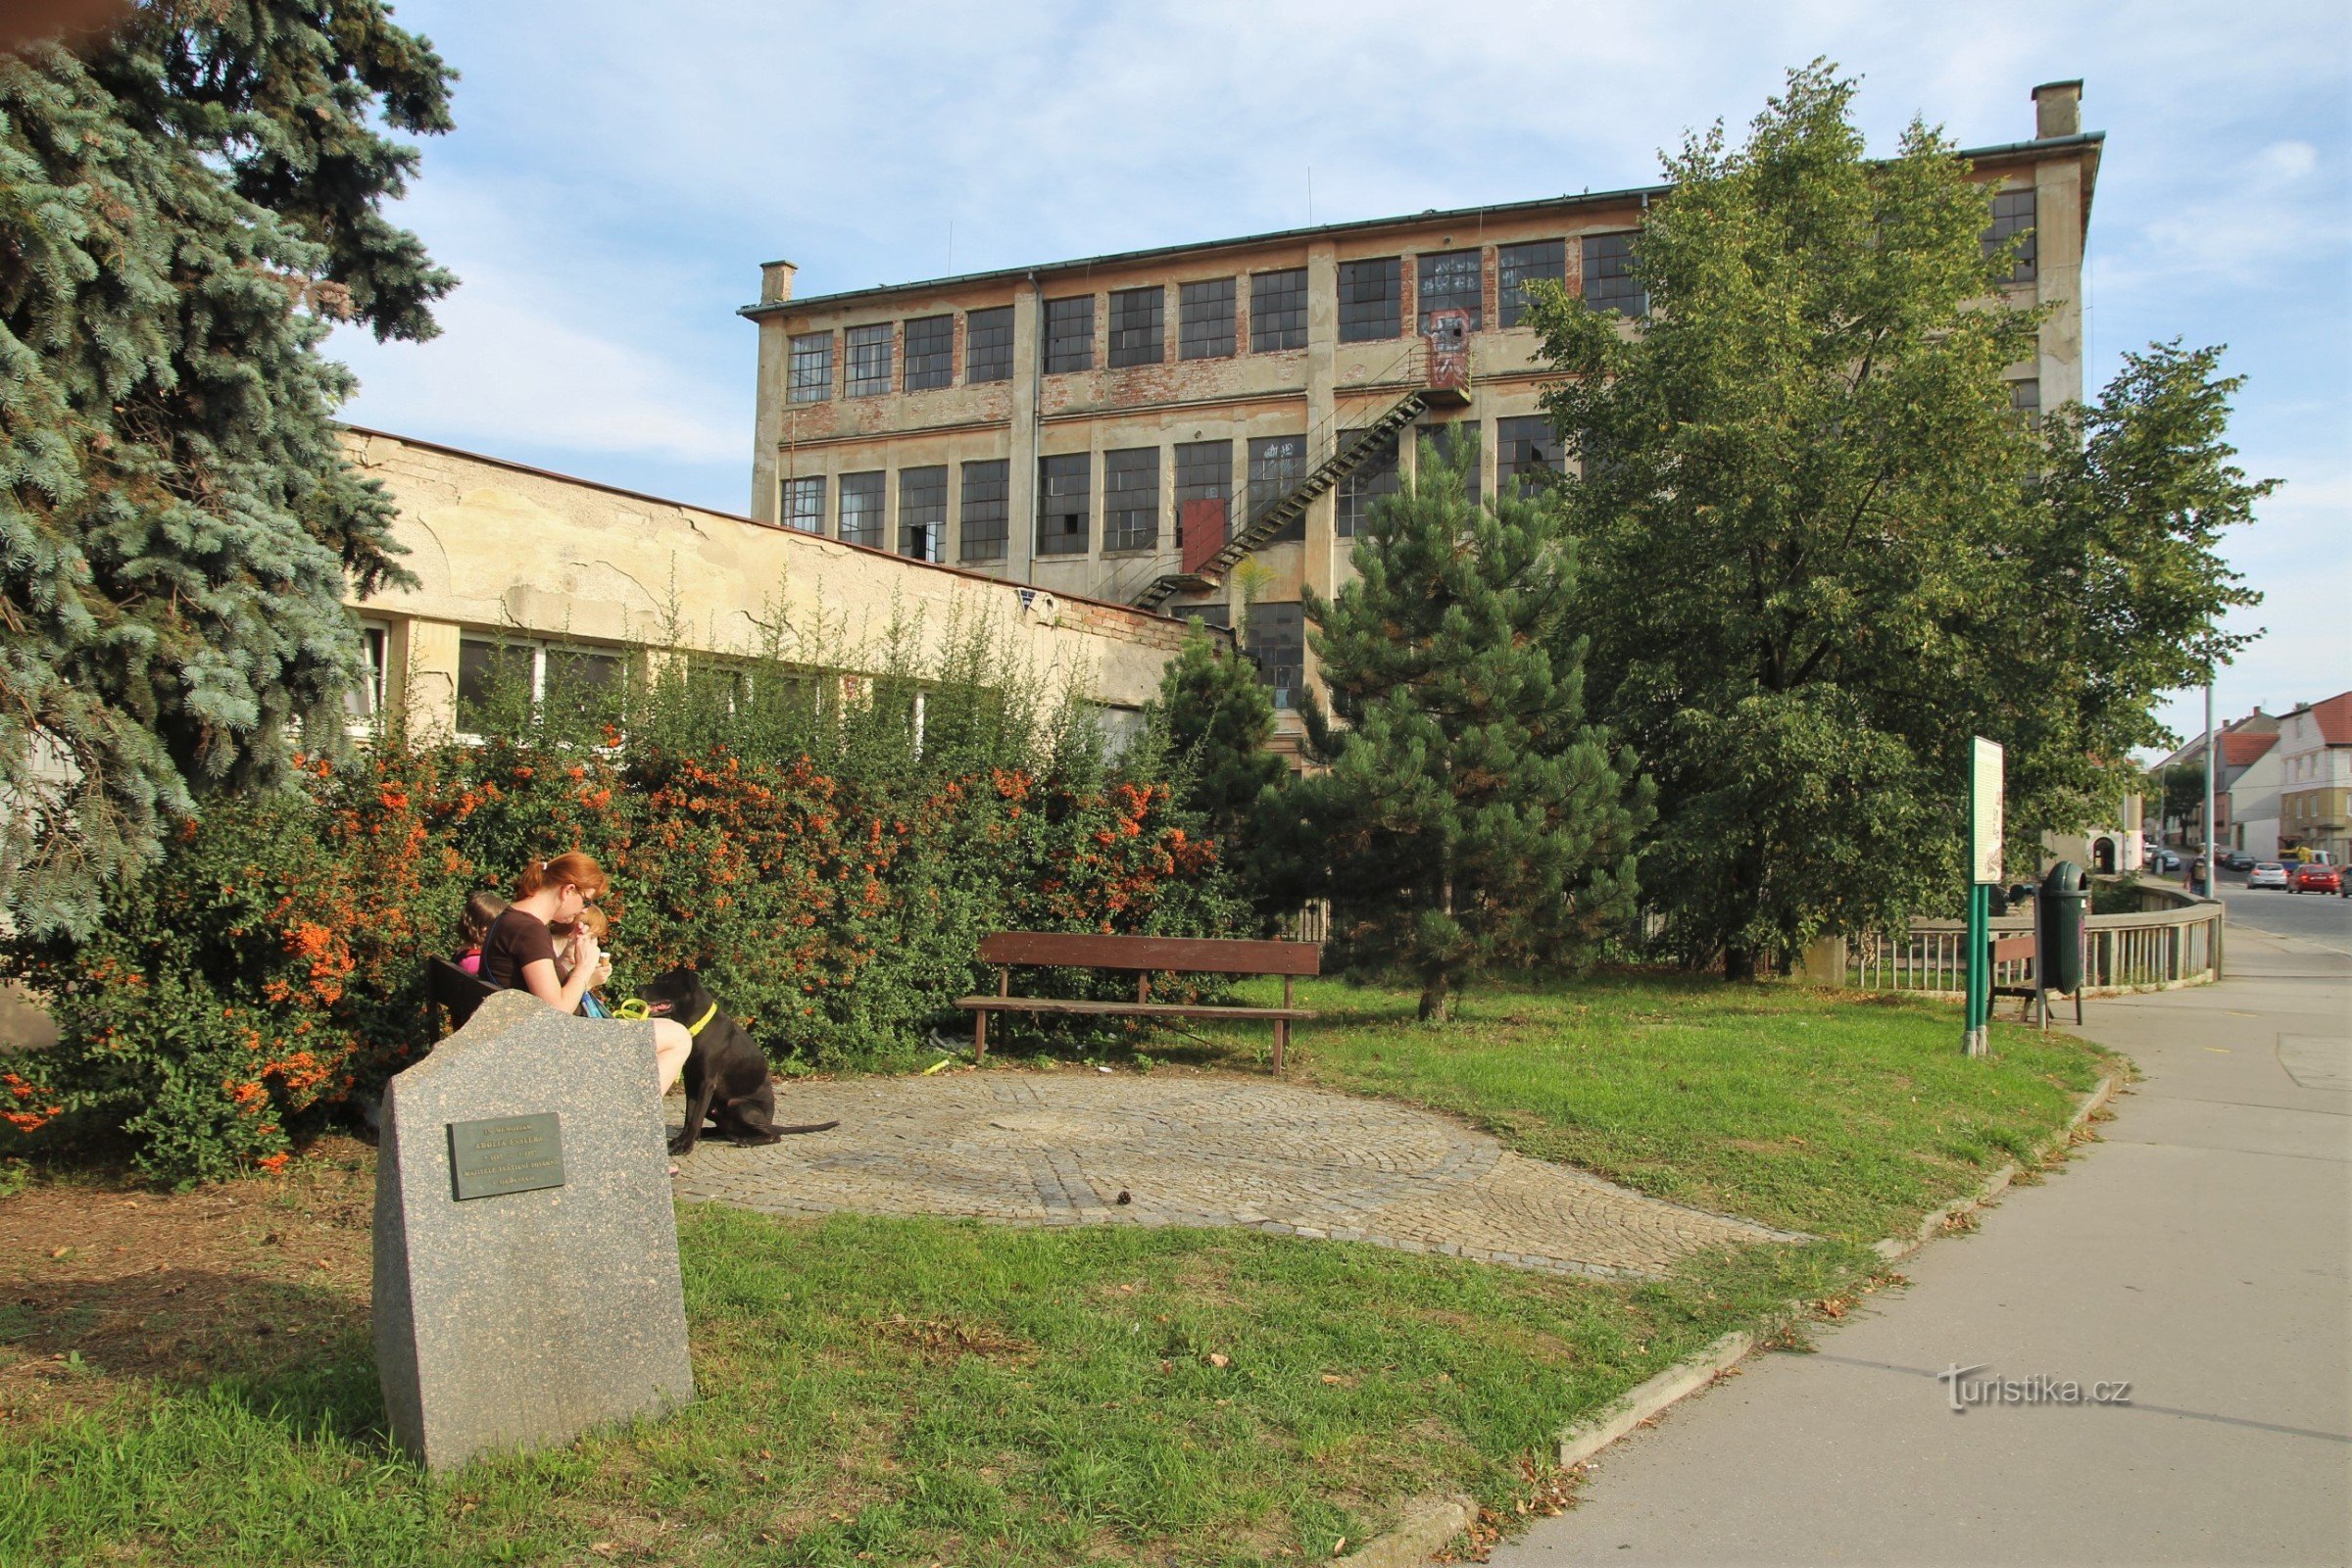 Пам'ятник Адольфу Есслеру, на задньому плані будівля фабрики Есслера